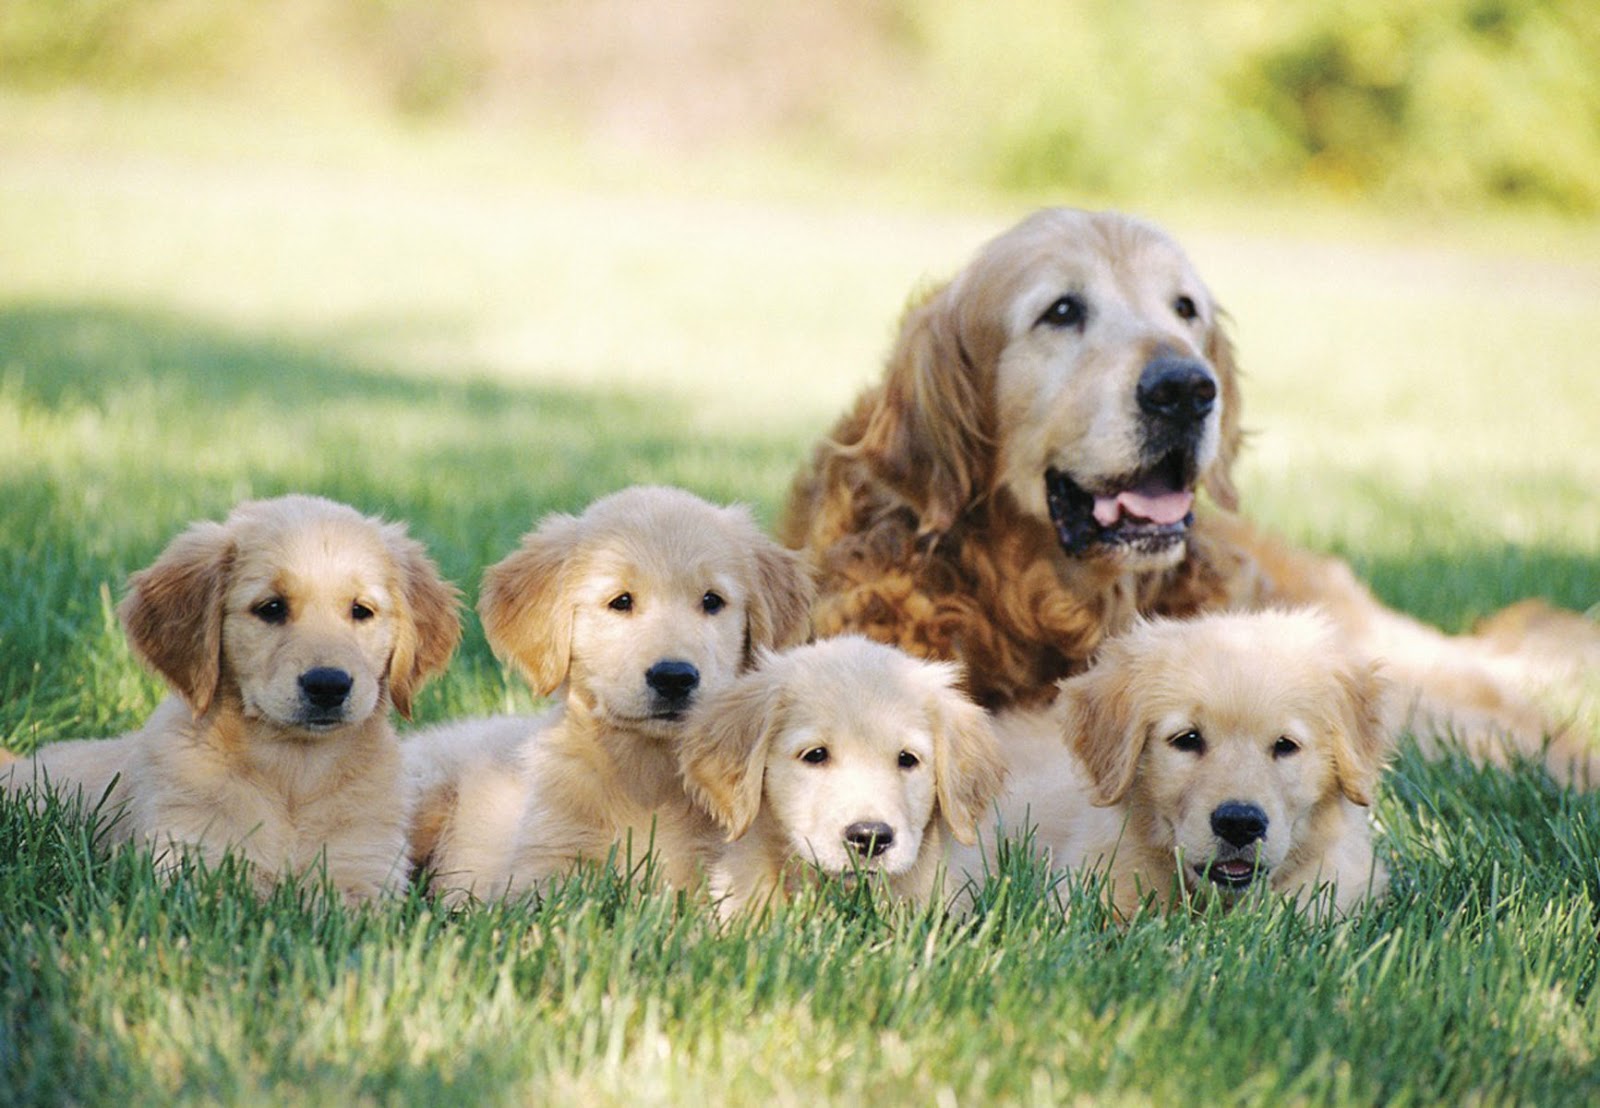 Cute Golden Retriever Puppies Wallpaper - WallpaperSafari